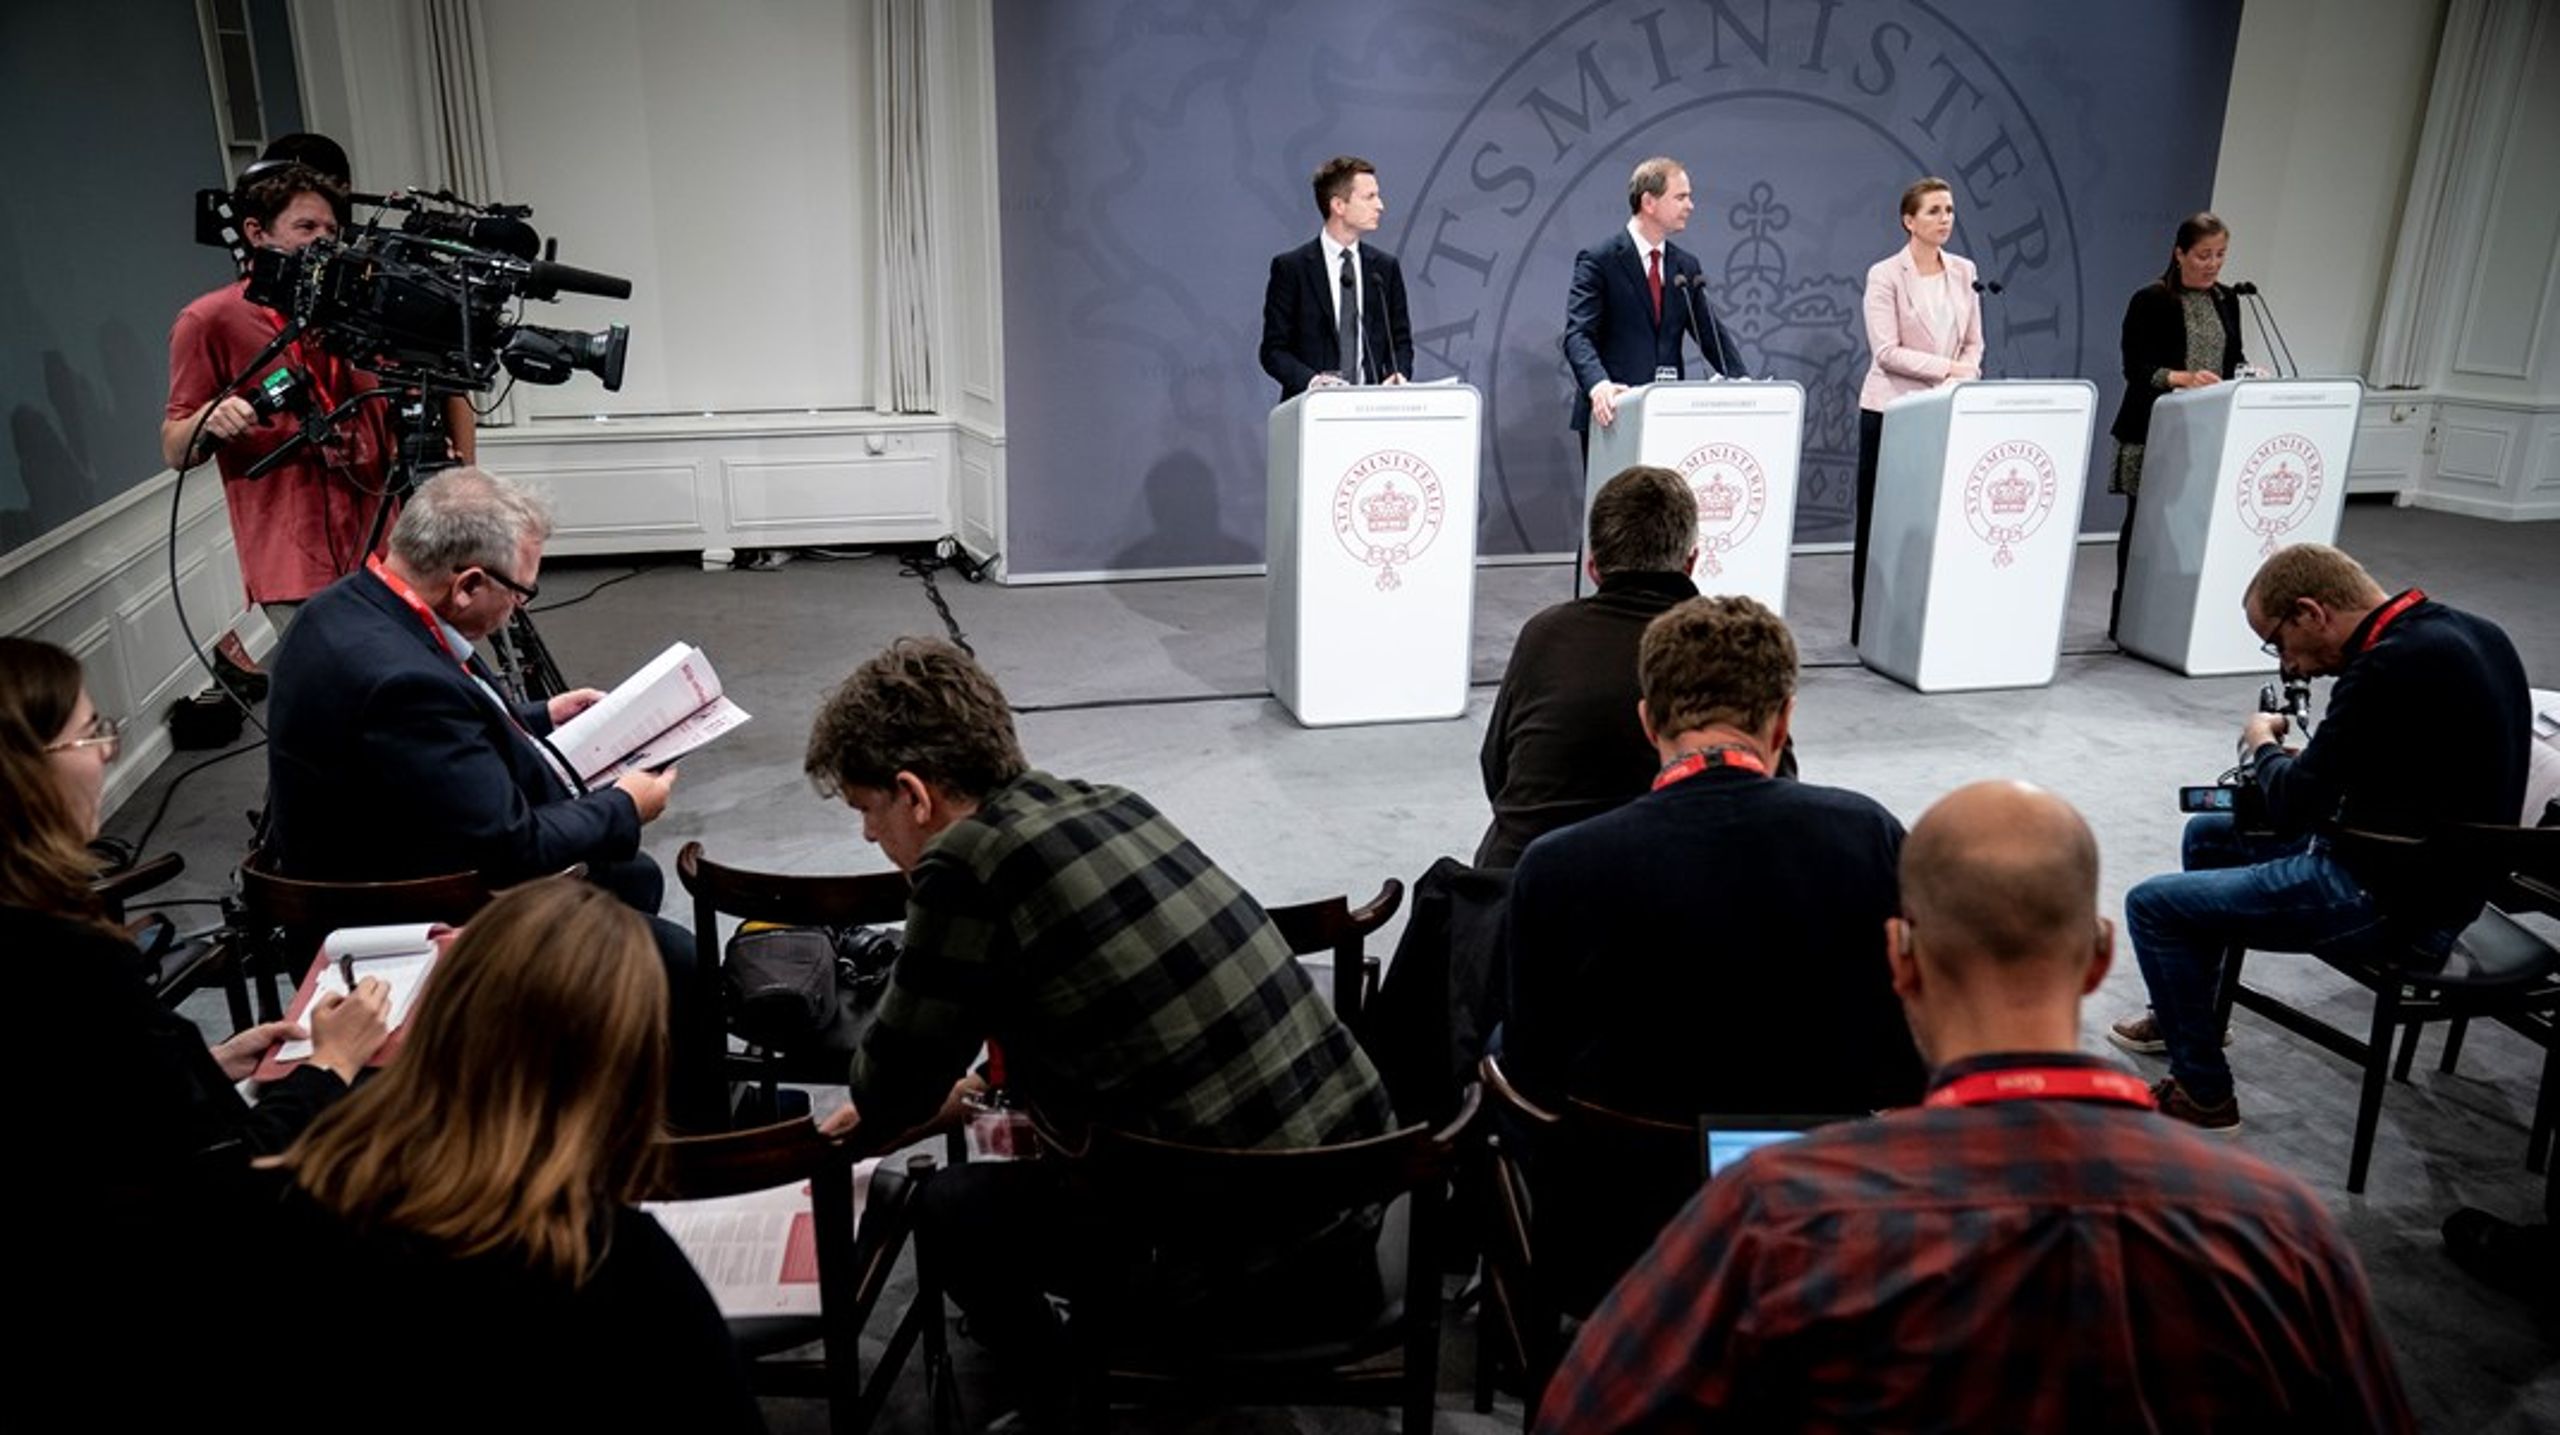 Presseopbuddet var stort, da statsminister Mette Frederiksen og S-regeringen i går præsenterede "Danmark kan mere III".